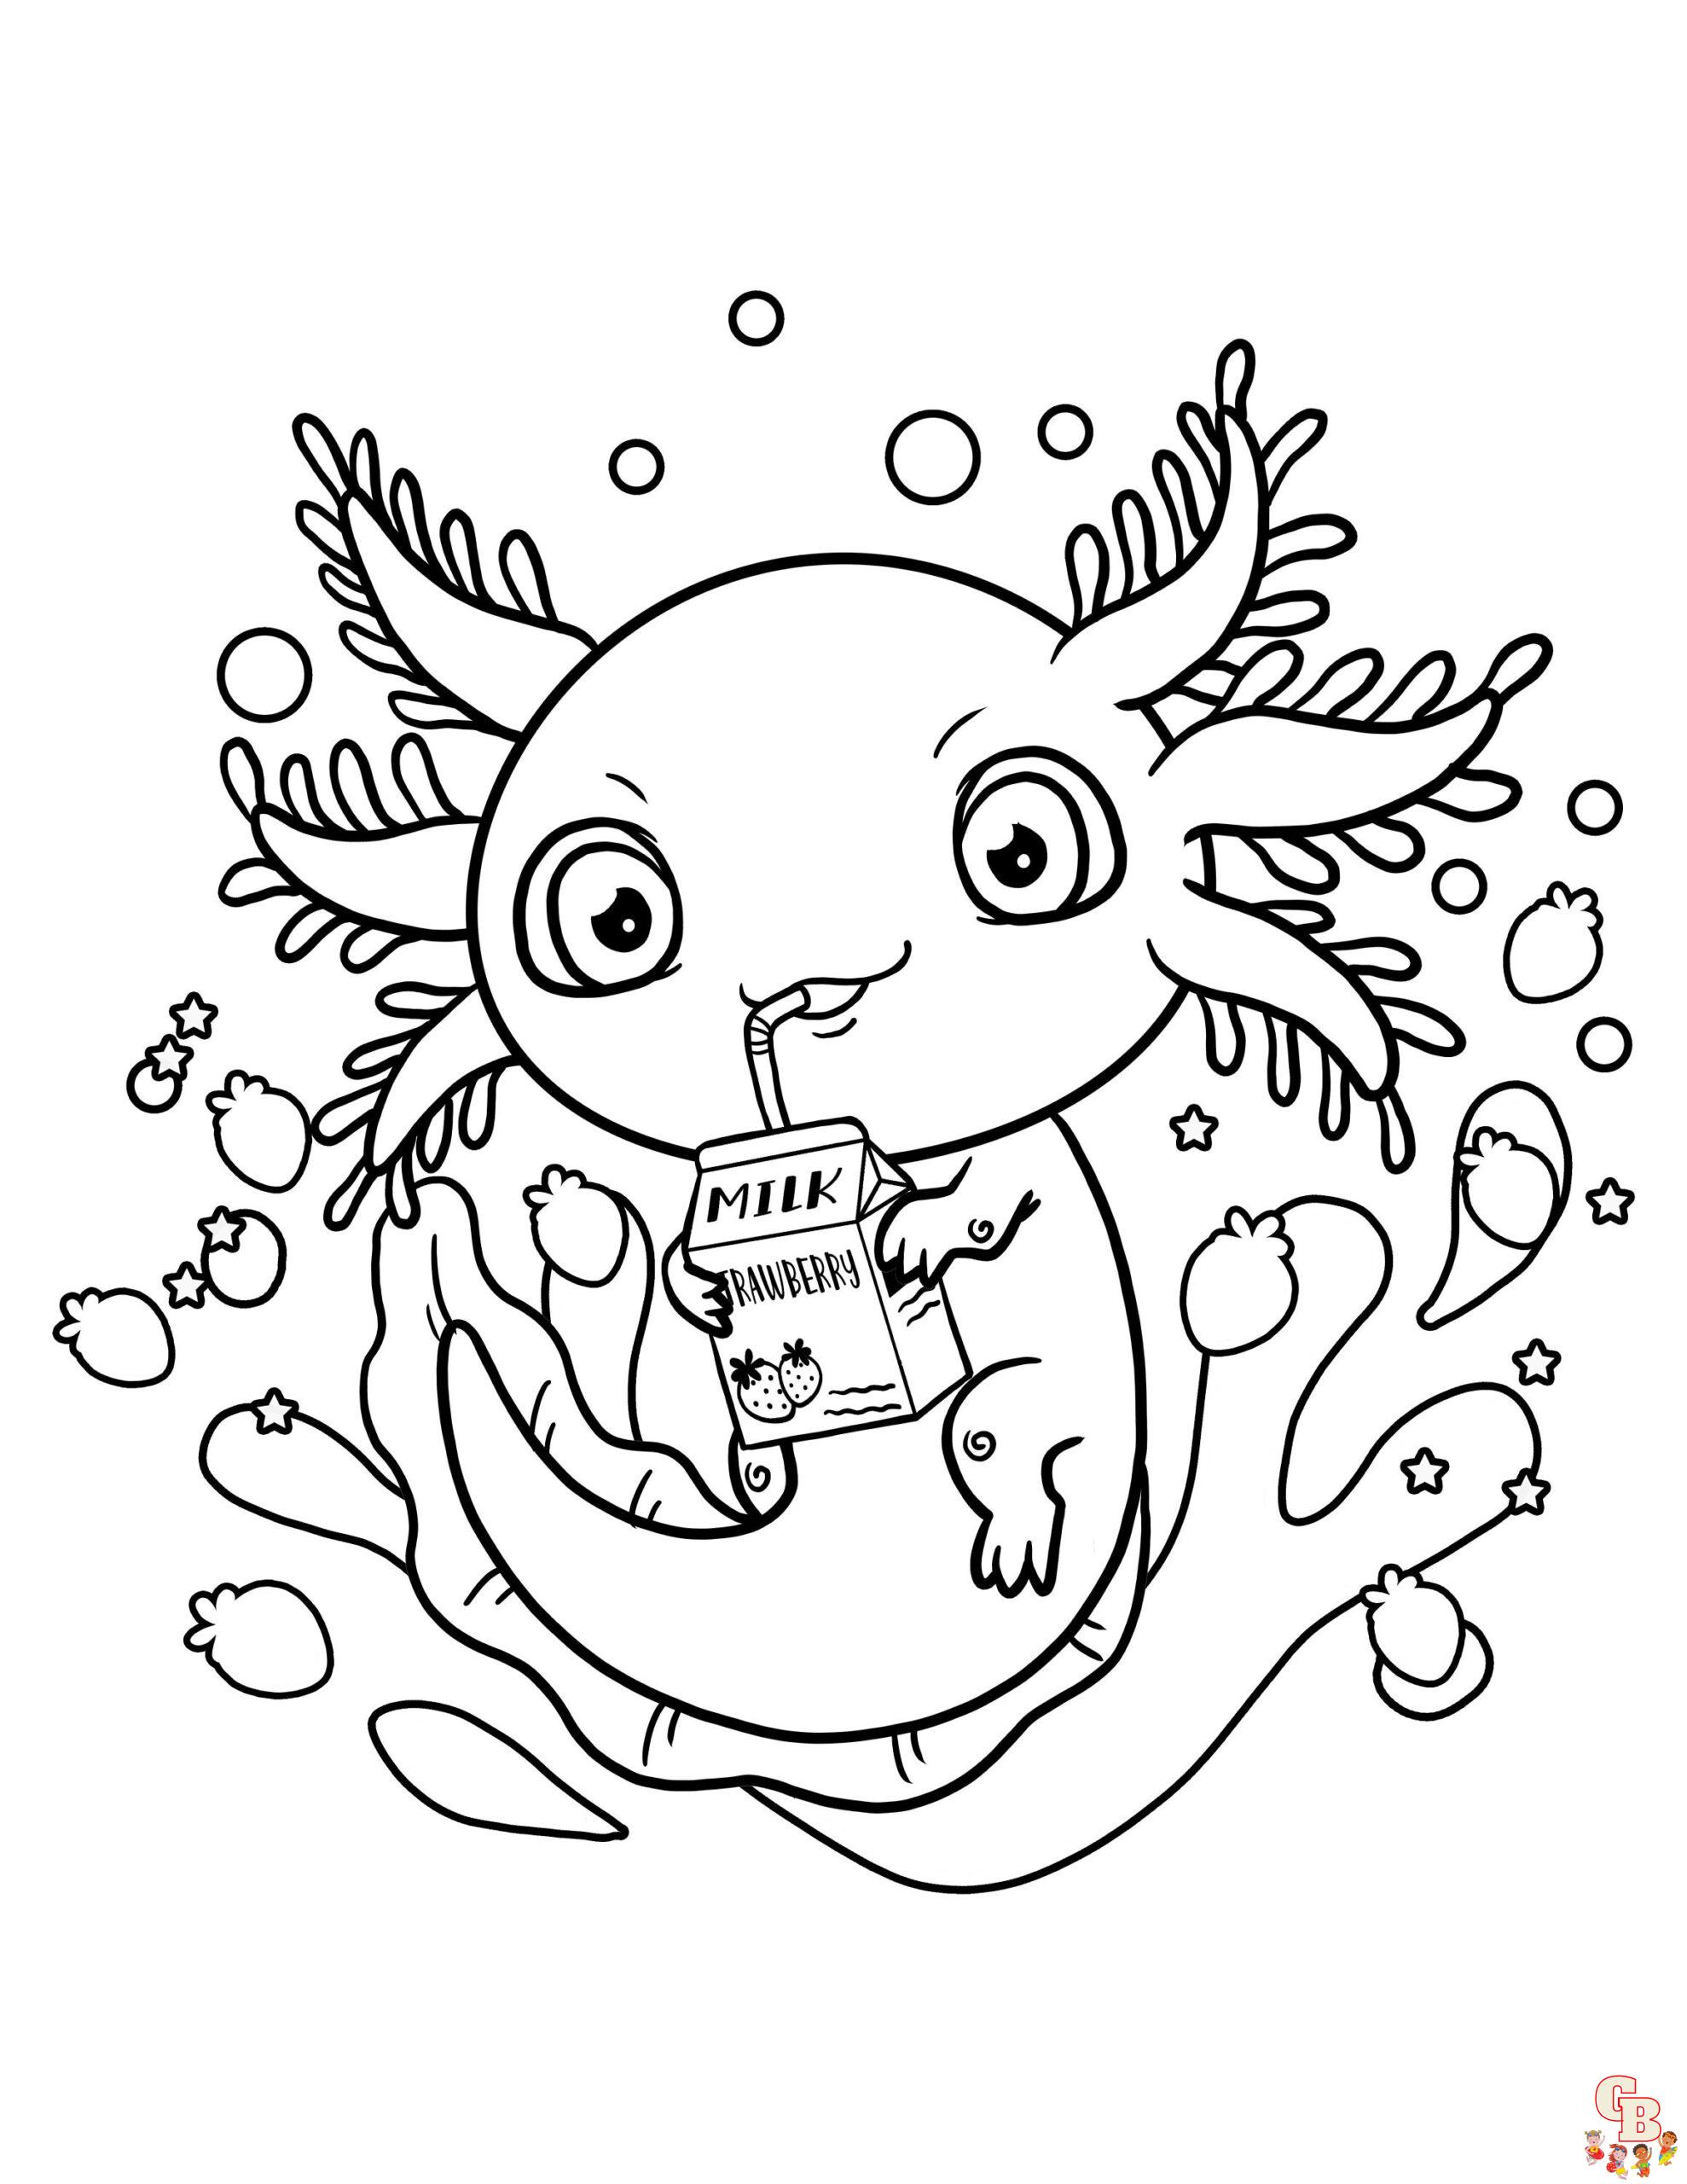 Axolotl ausmalbilder zum ausdrucken 2